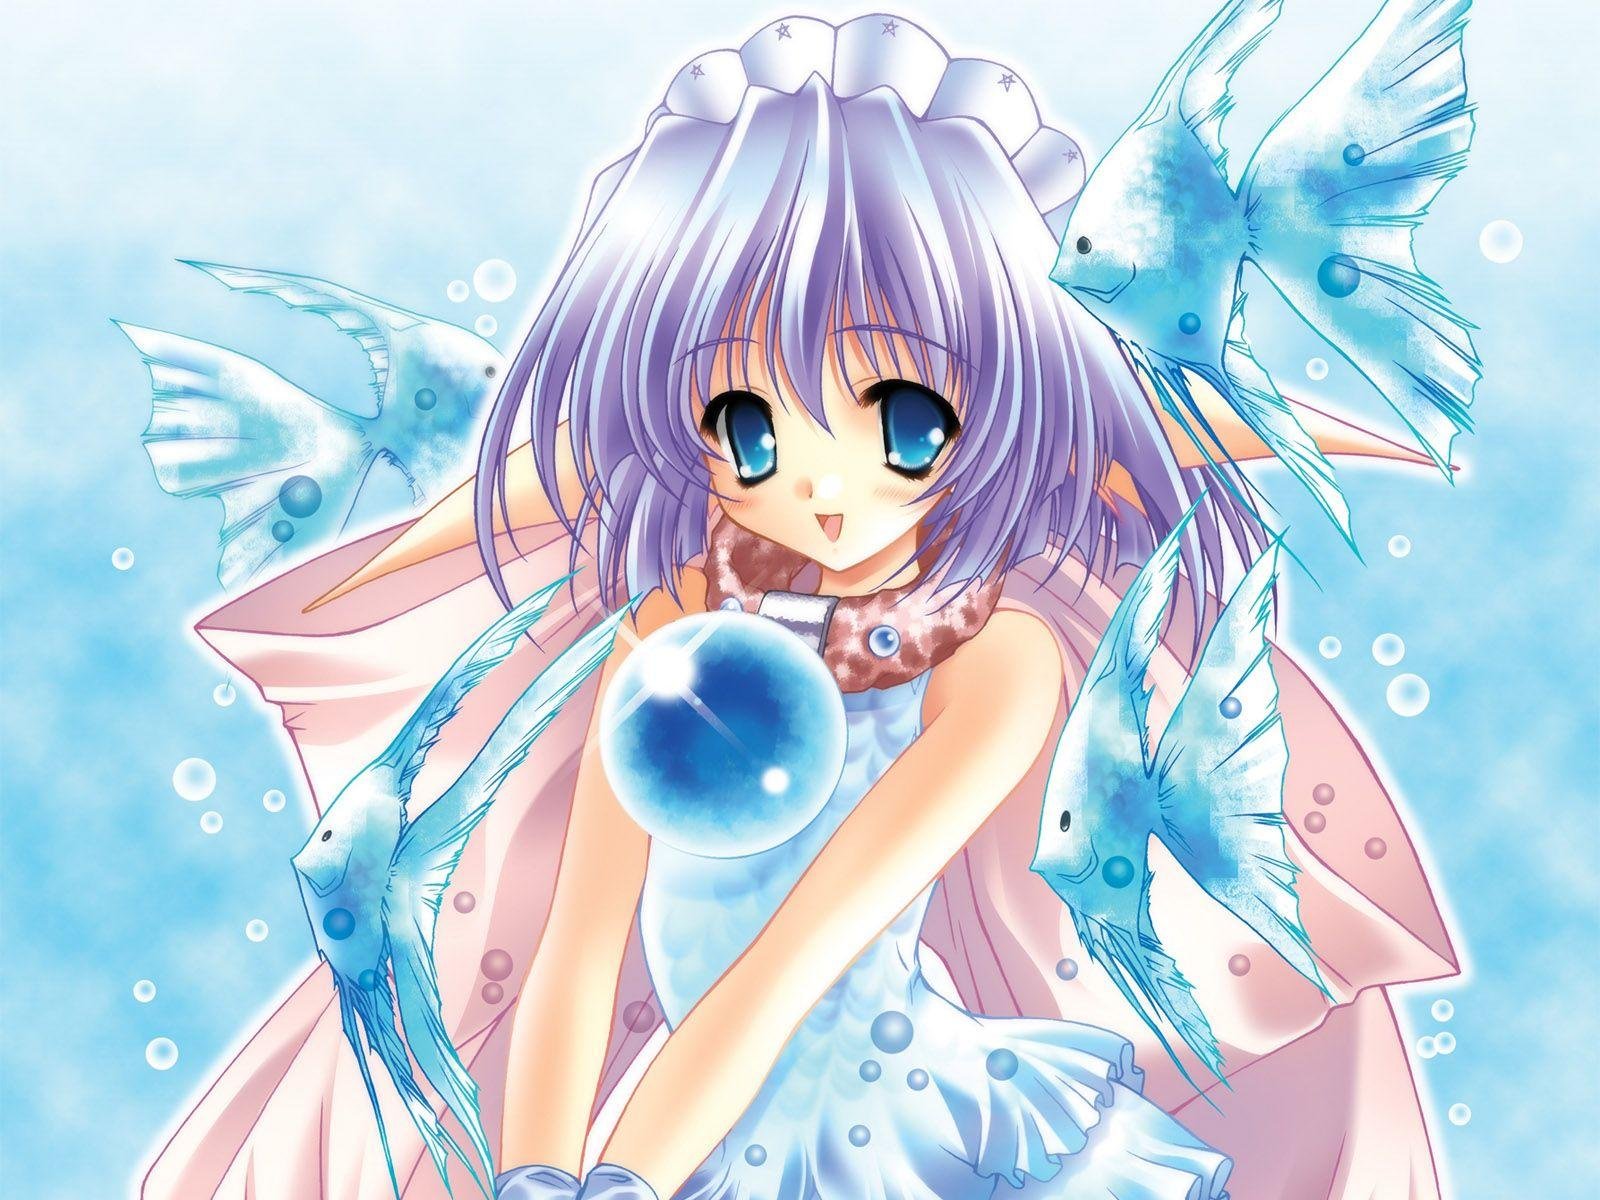 Anime Cute Girl Manga Series HD Desktop Wallpaper 105356